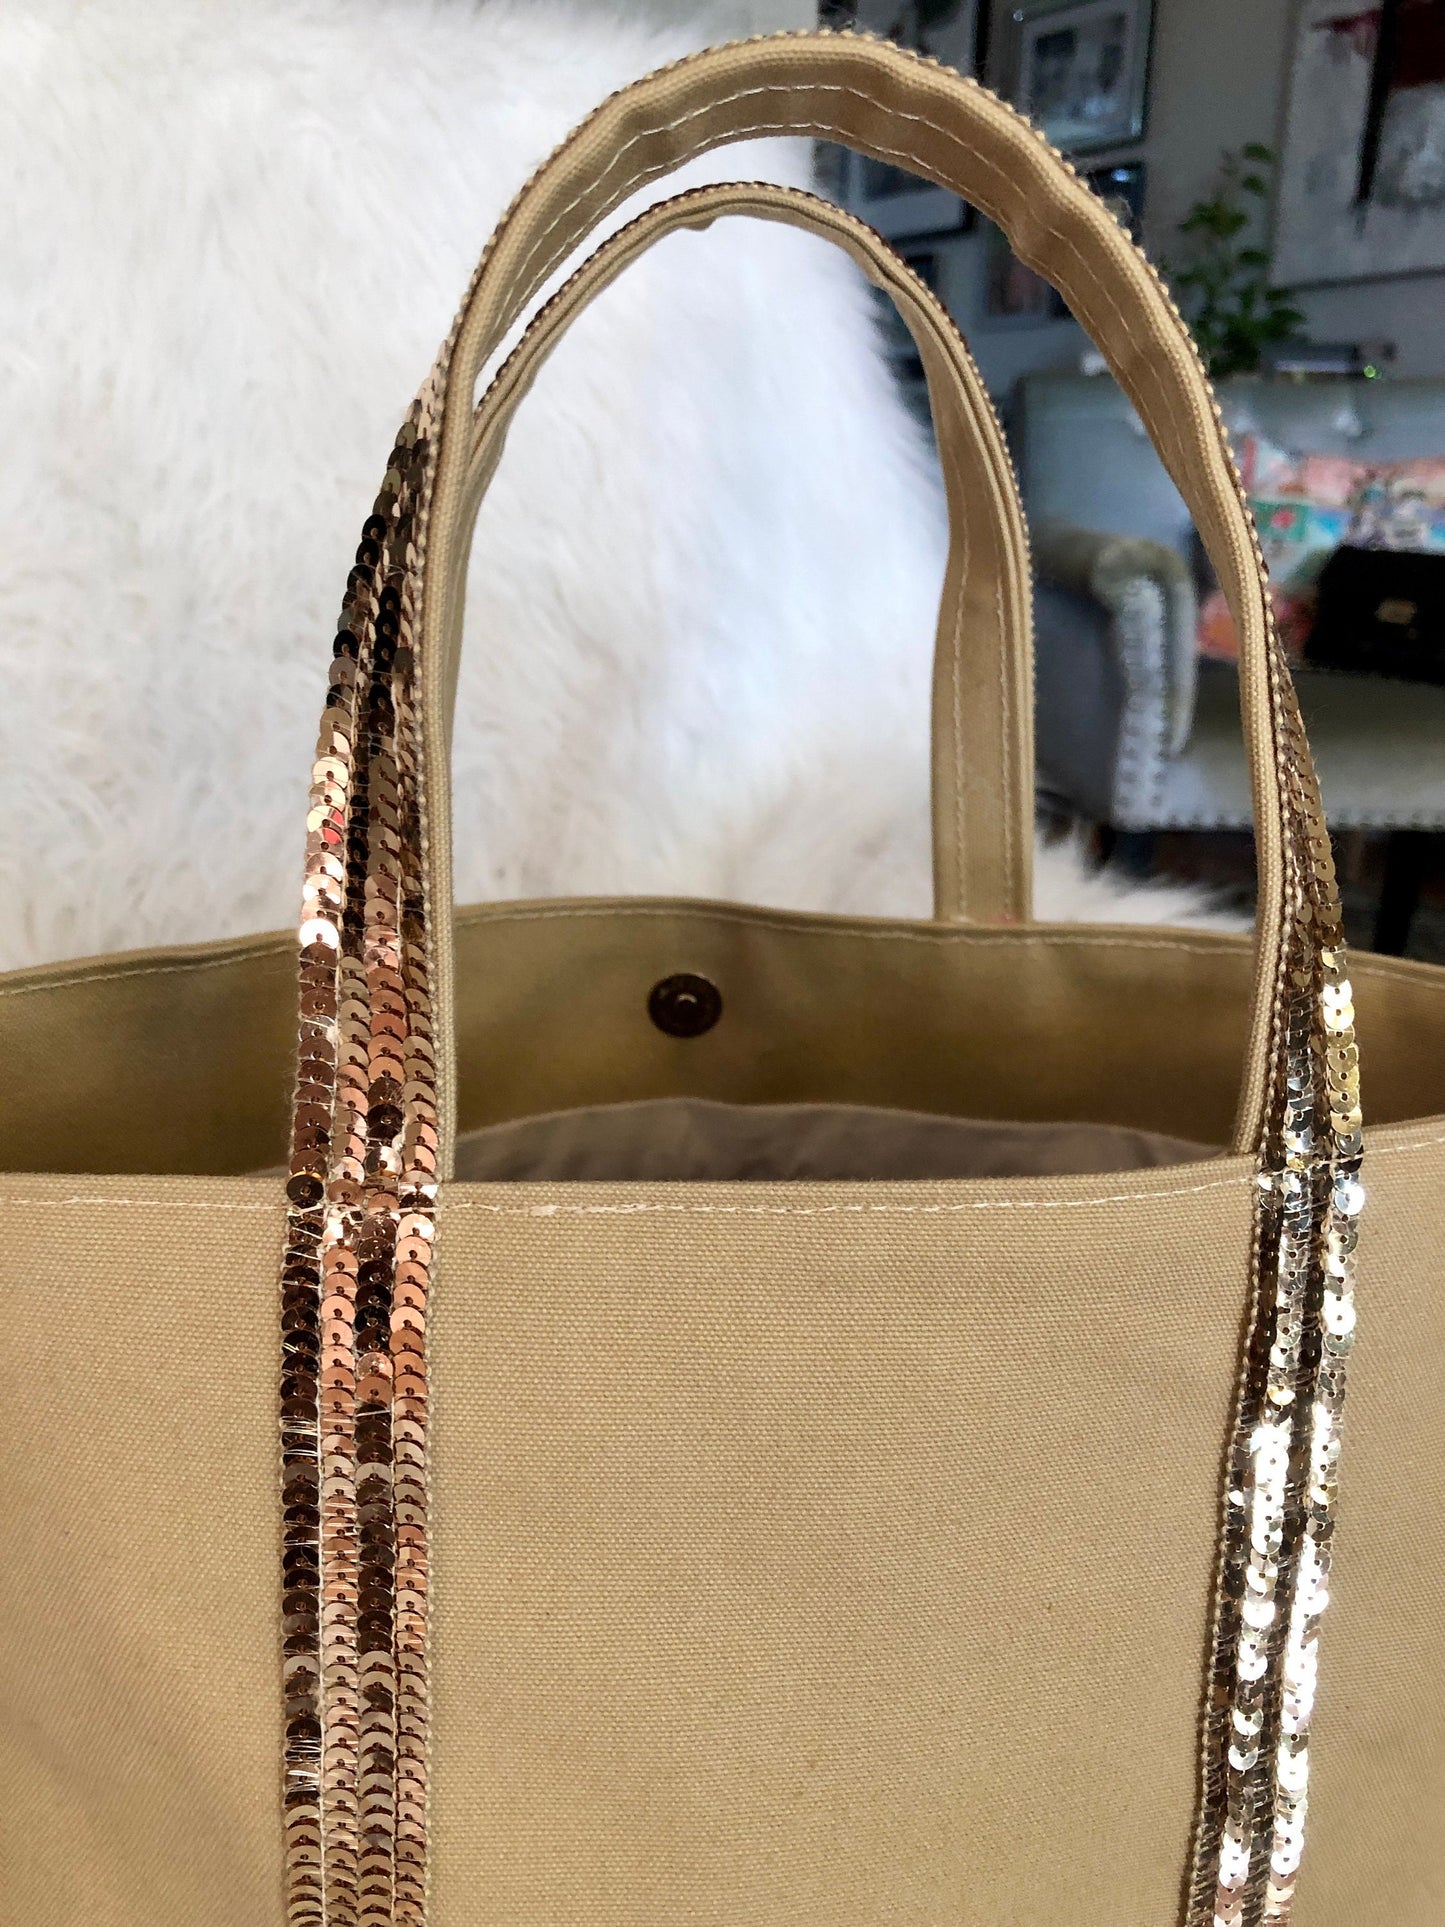 Camel handbag, trendy summer tote bag, sequin tote, sequin beach bag, personalized bag